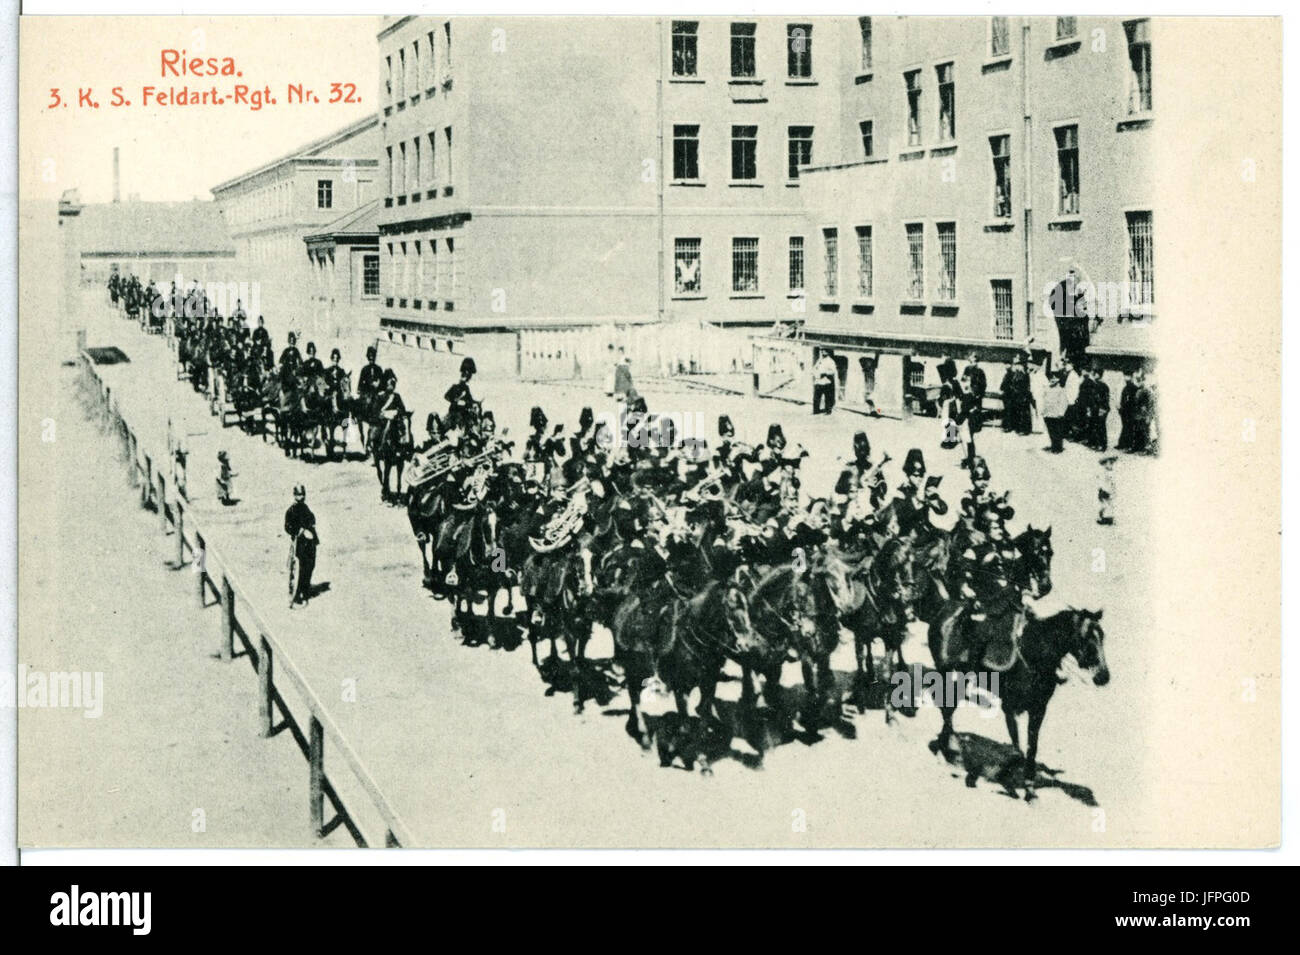 11758-Riesa-1910-3. Königlich Sächsisches Feldartillerie-Regiment Nr. 32-Brück & Sohn Kunstverlag Stock Photo